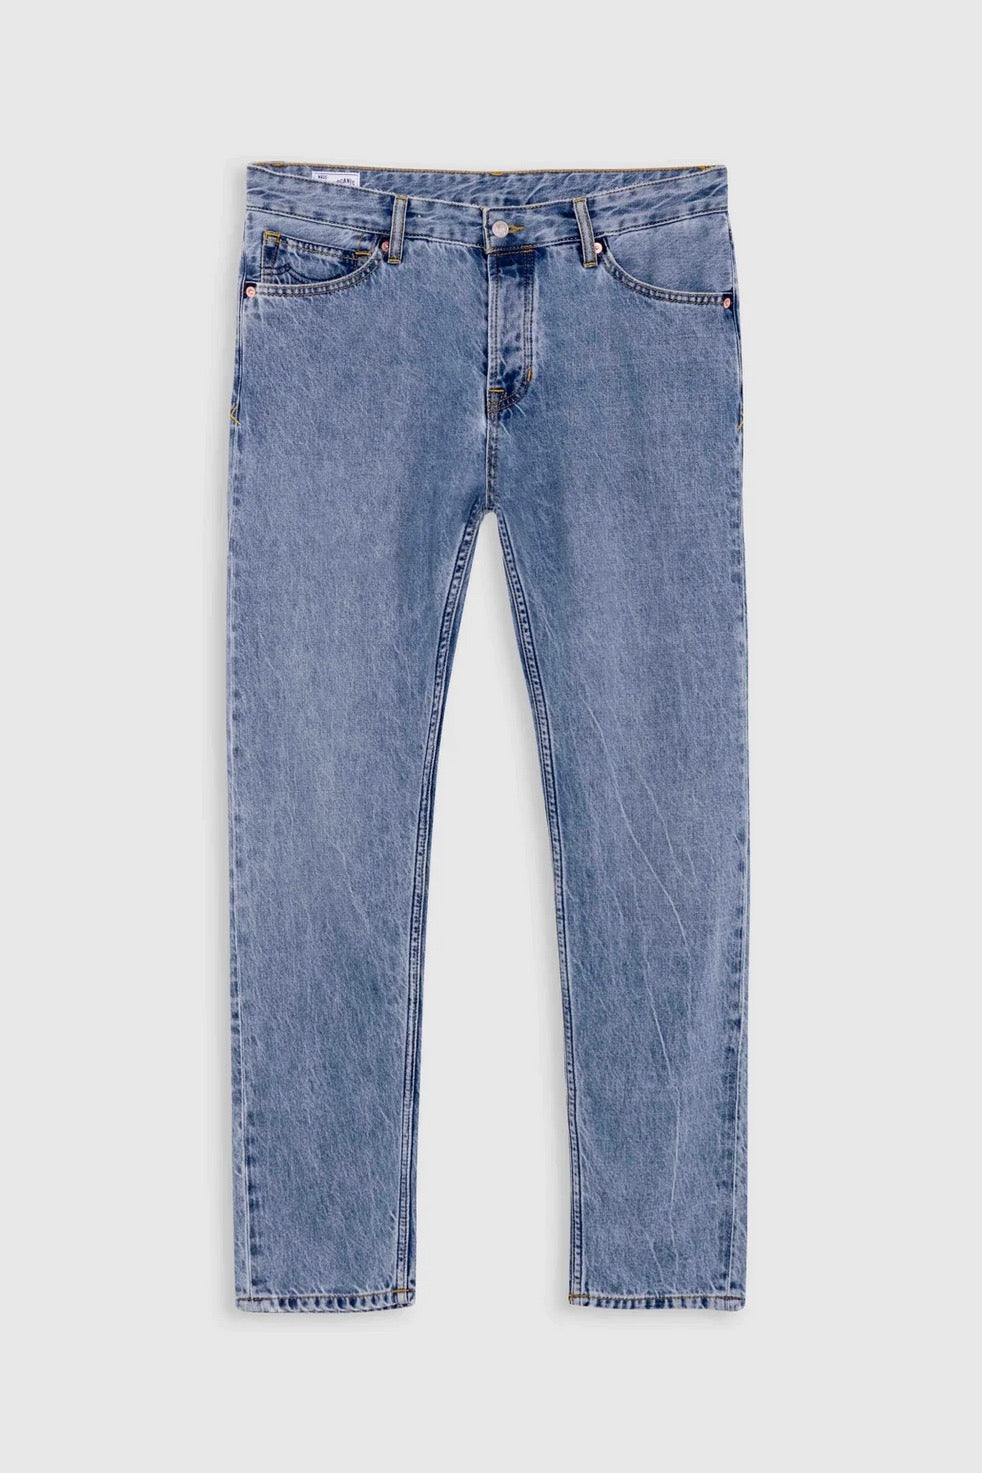 JERRICK Jeans cindy mid used